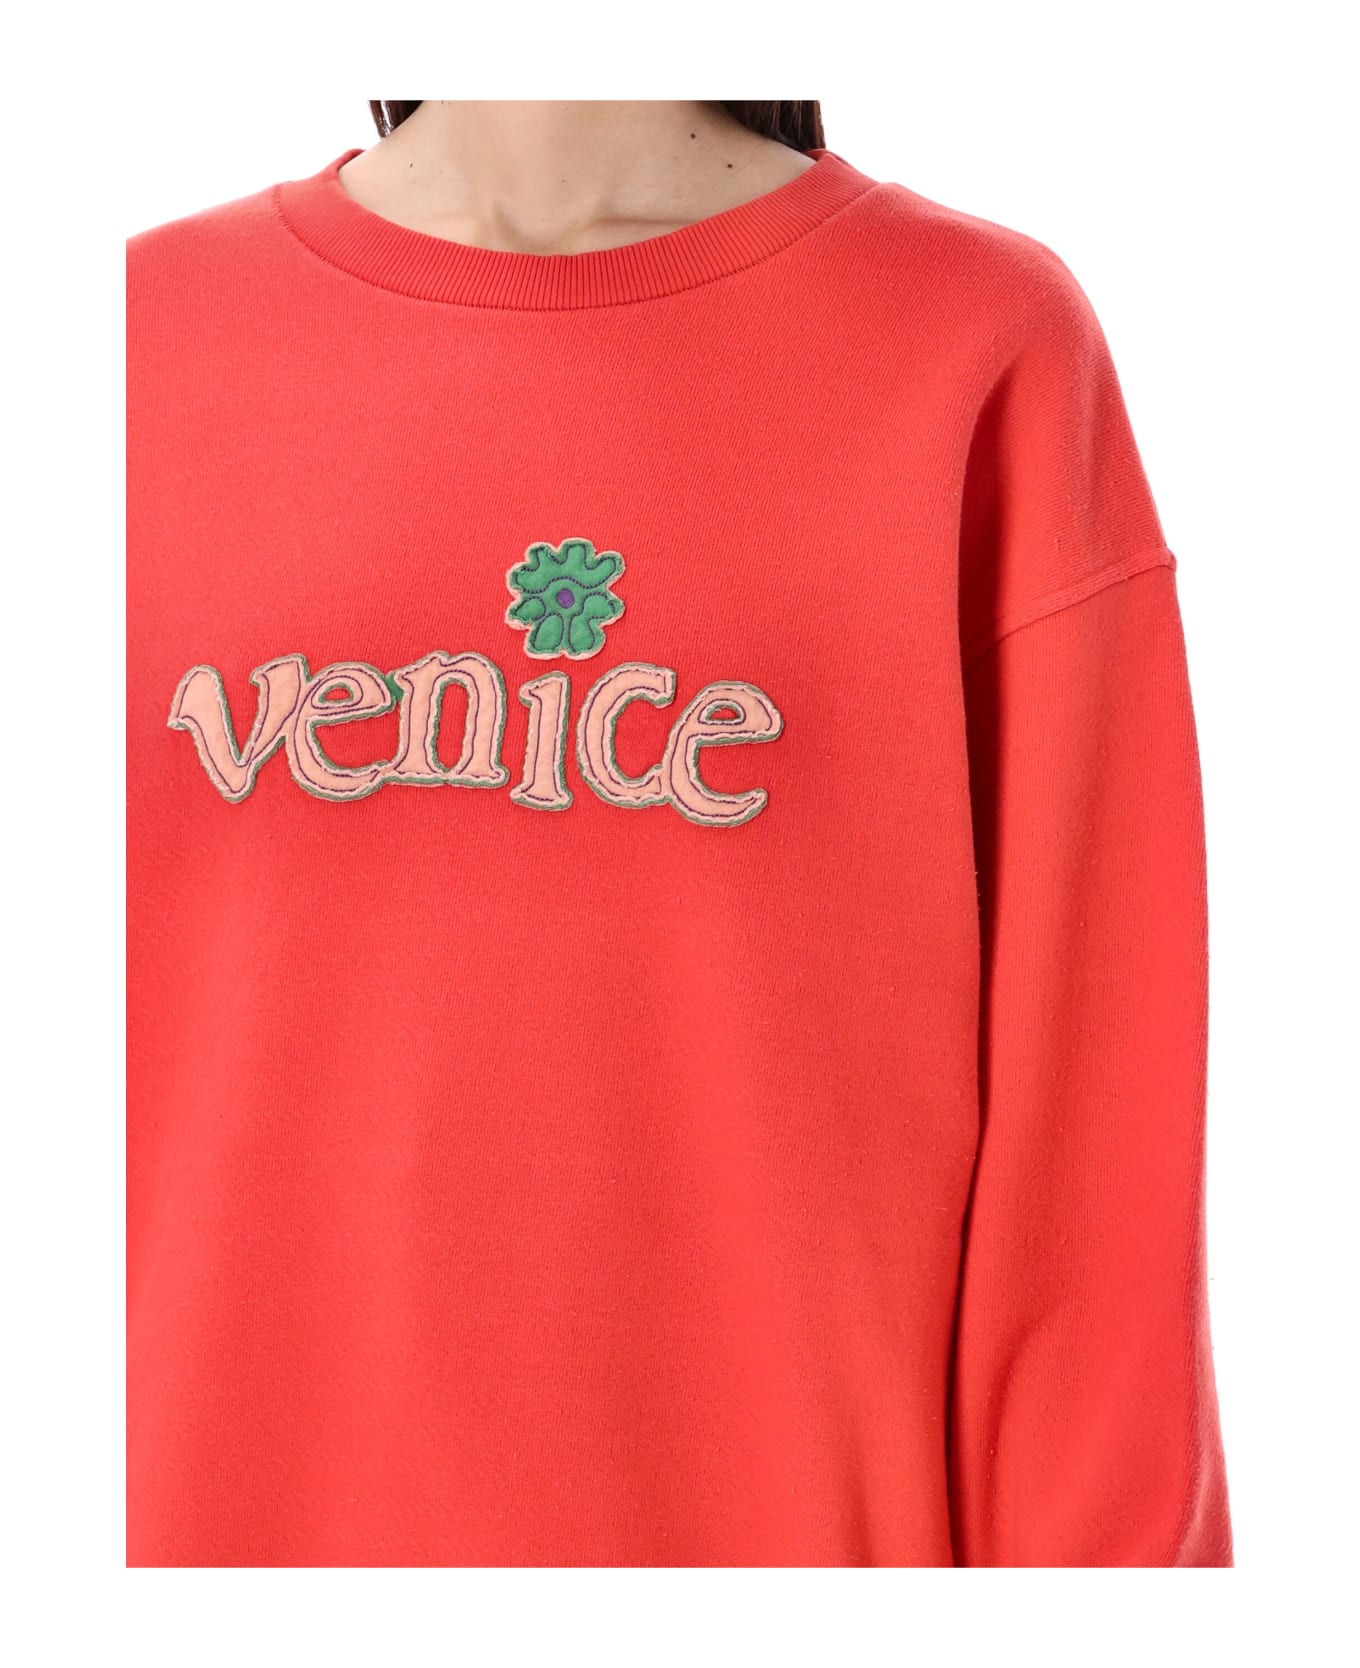 ERL Venice Sweatshirt - RED